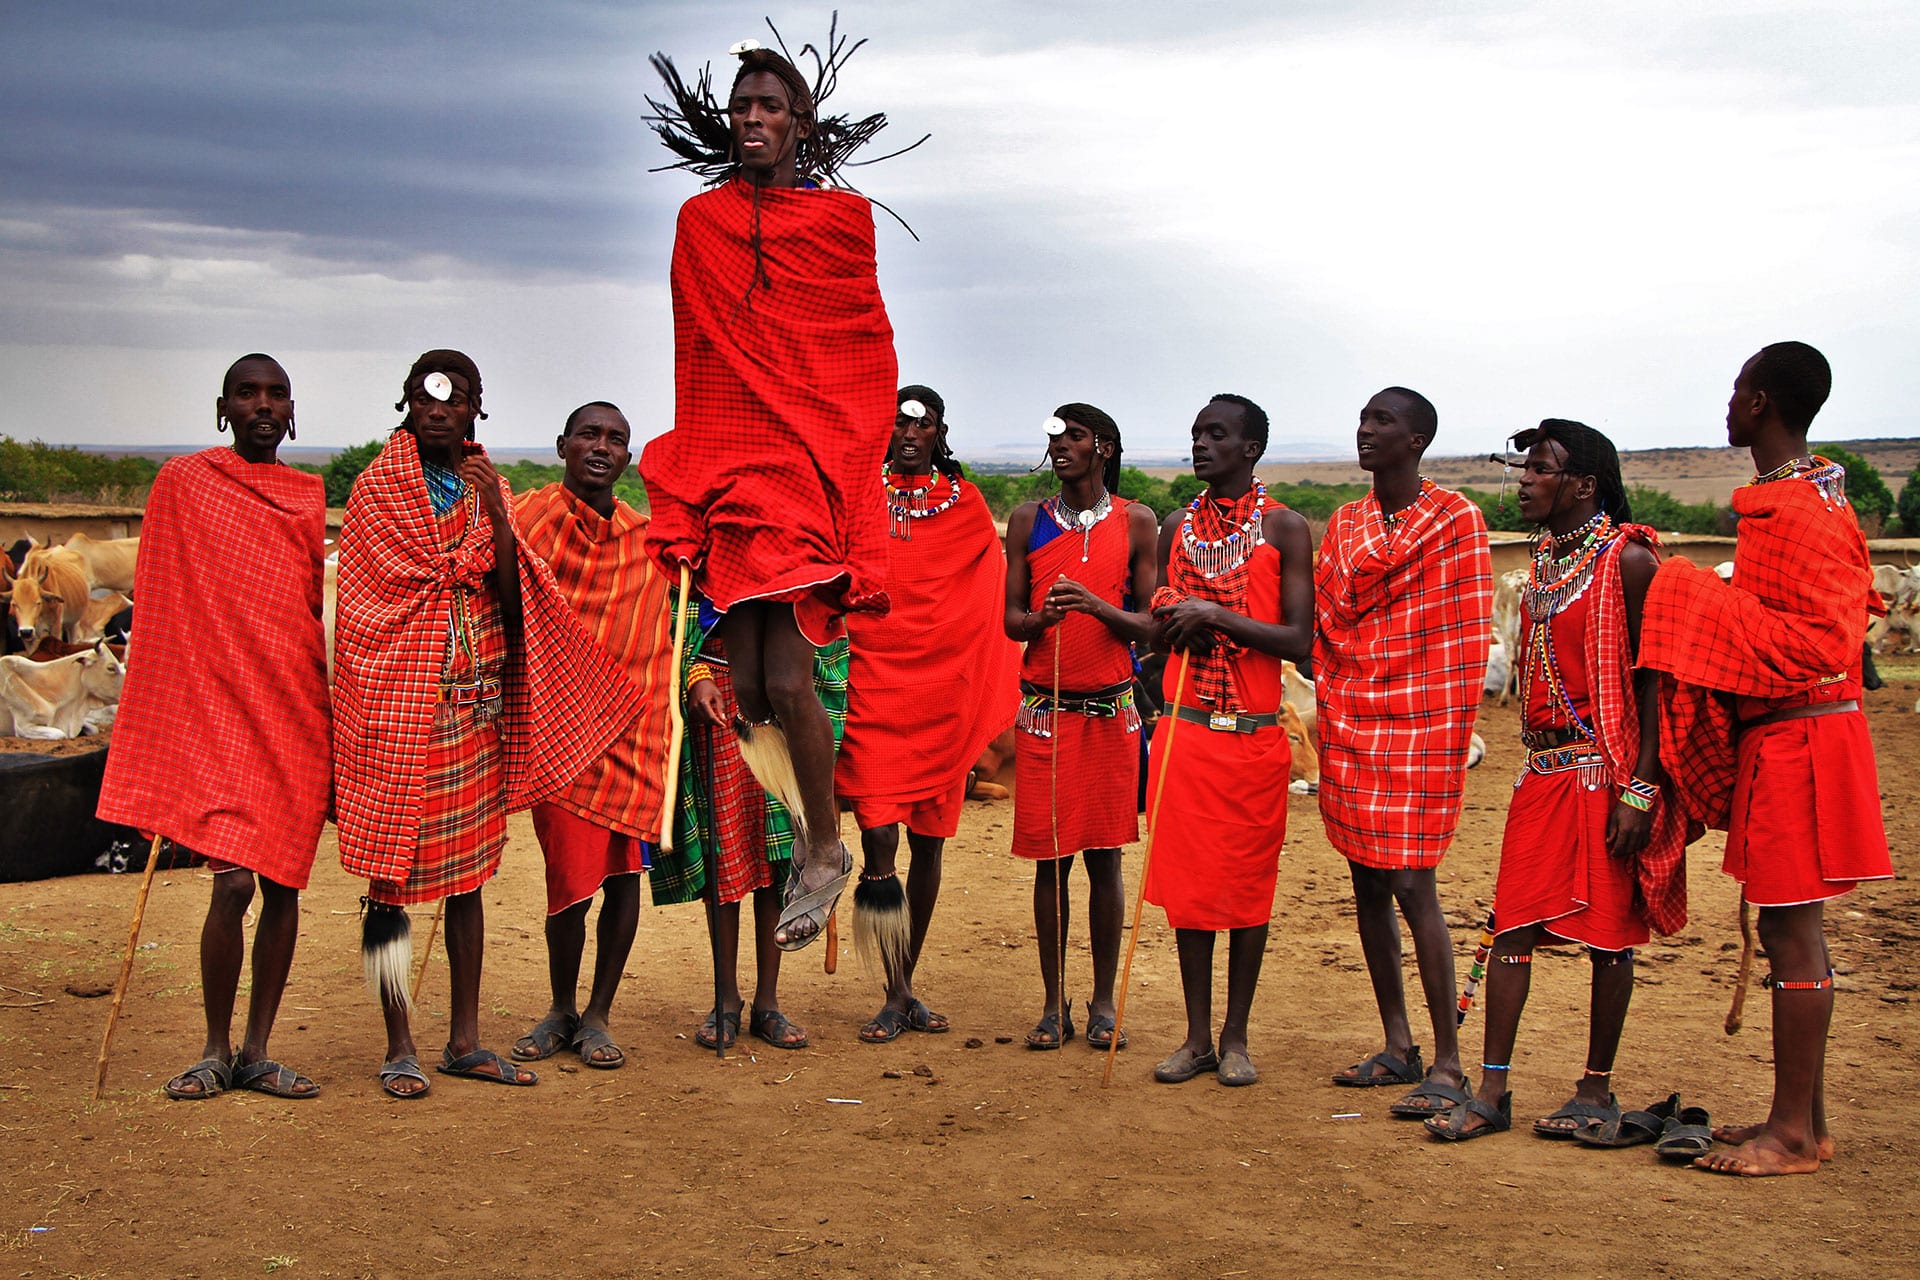 A maasai of East Africa performing the Adumu dance